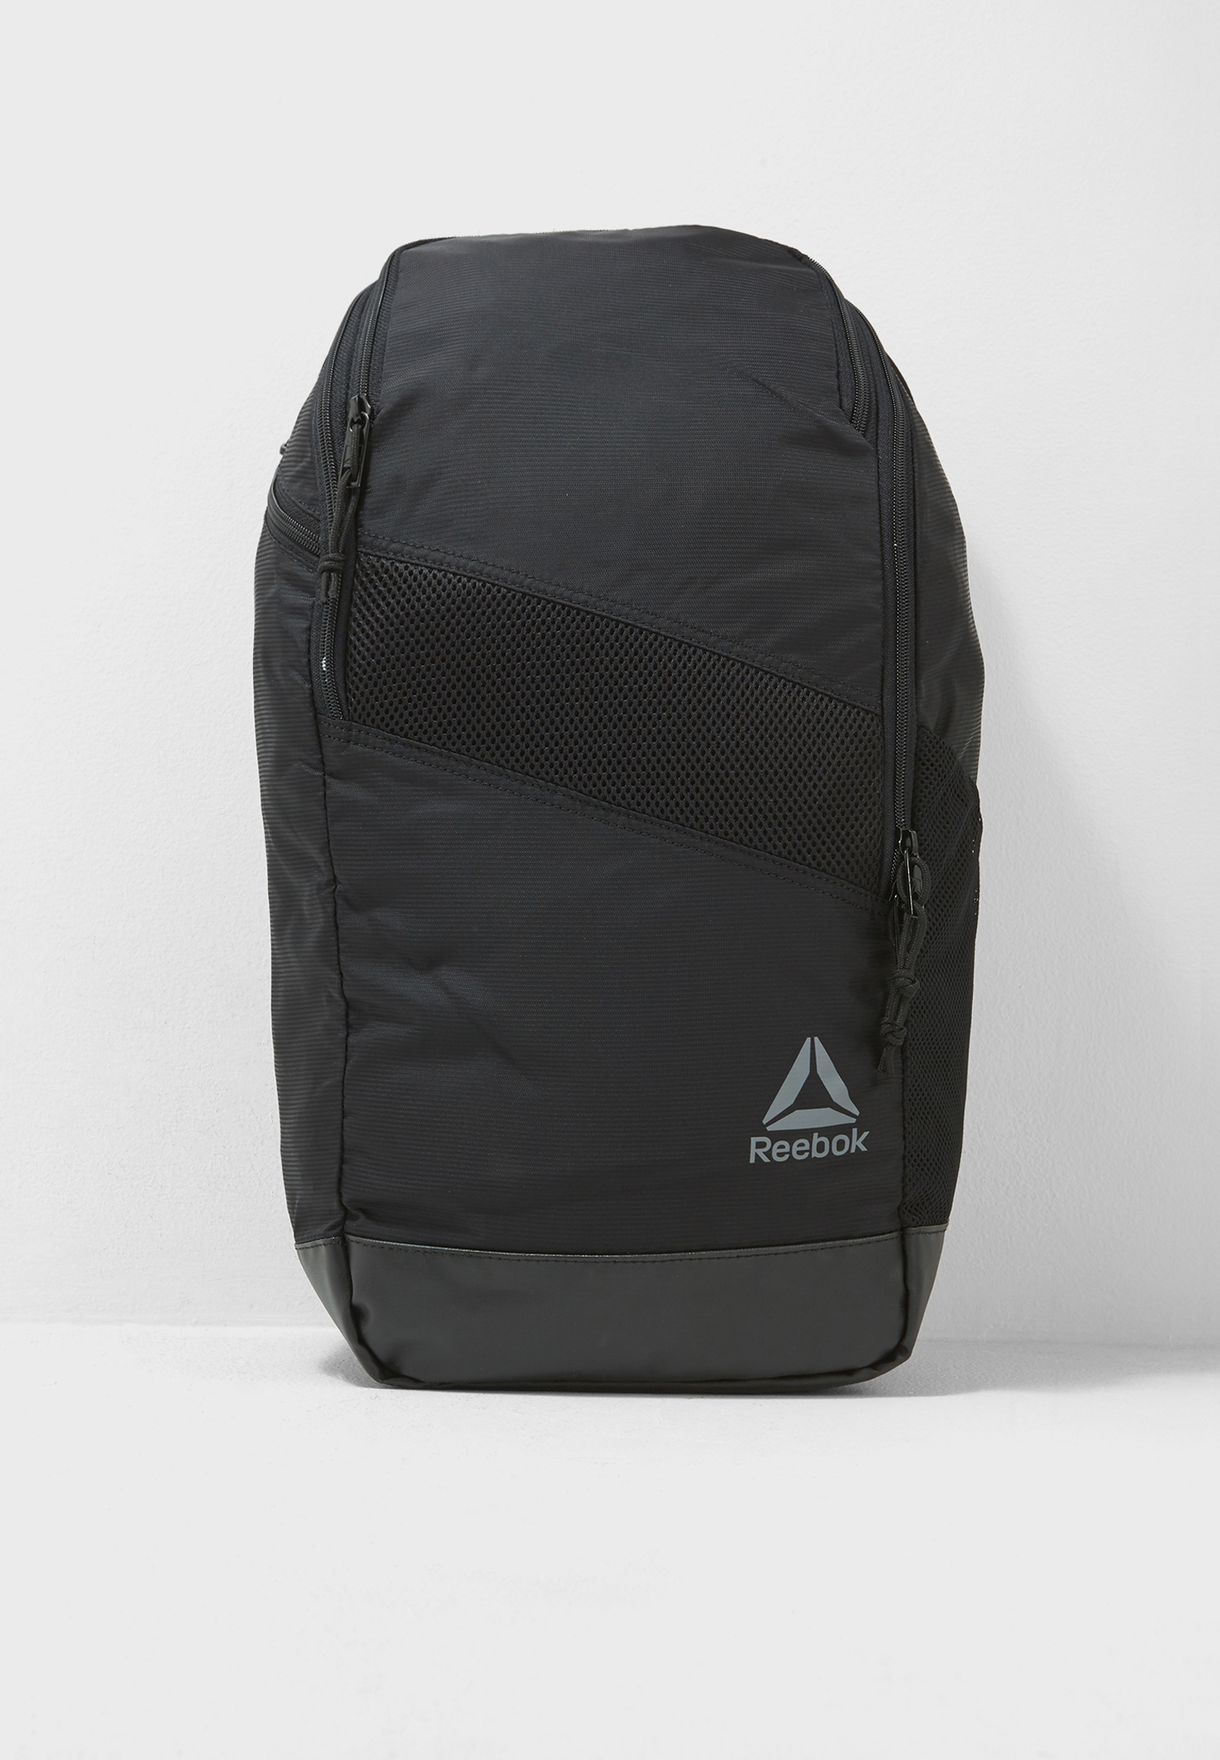 reebok backpack 24l